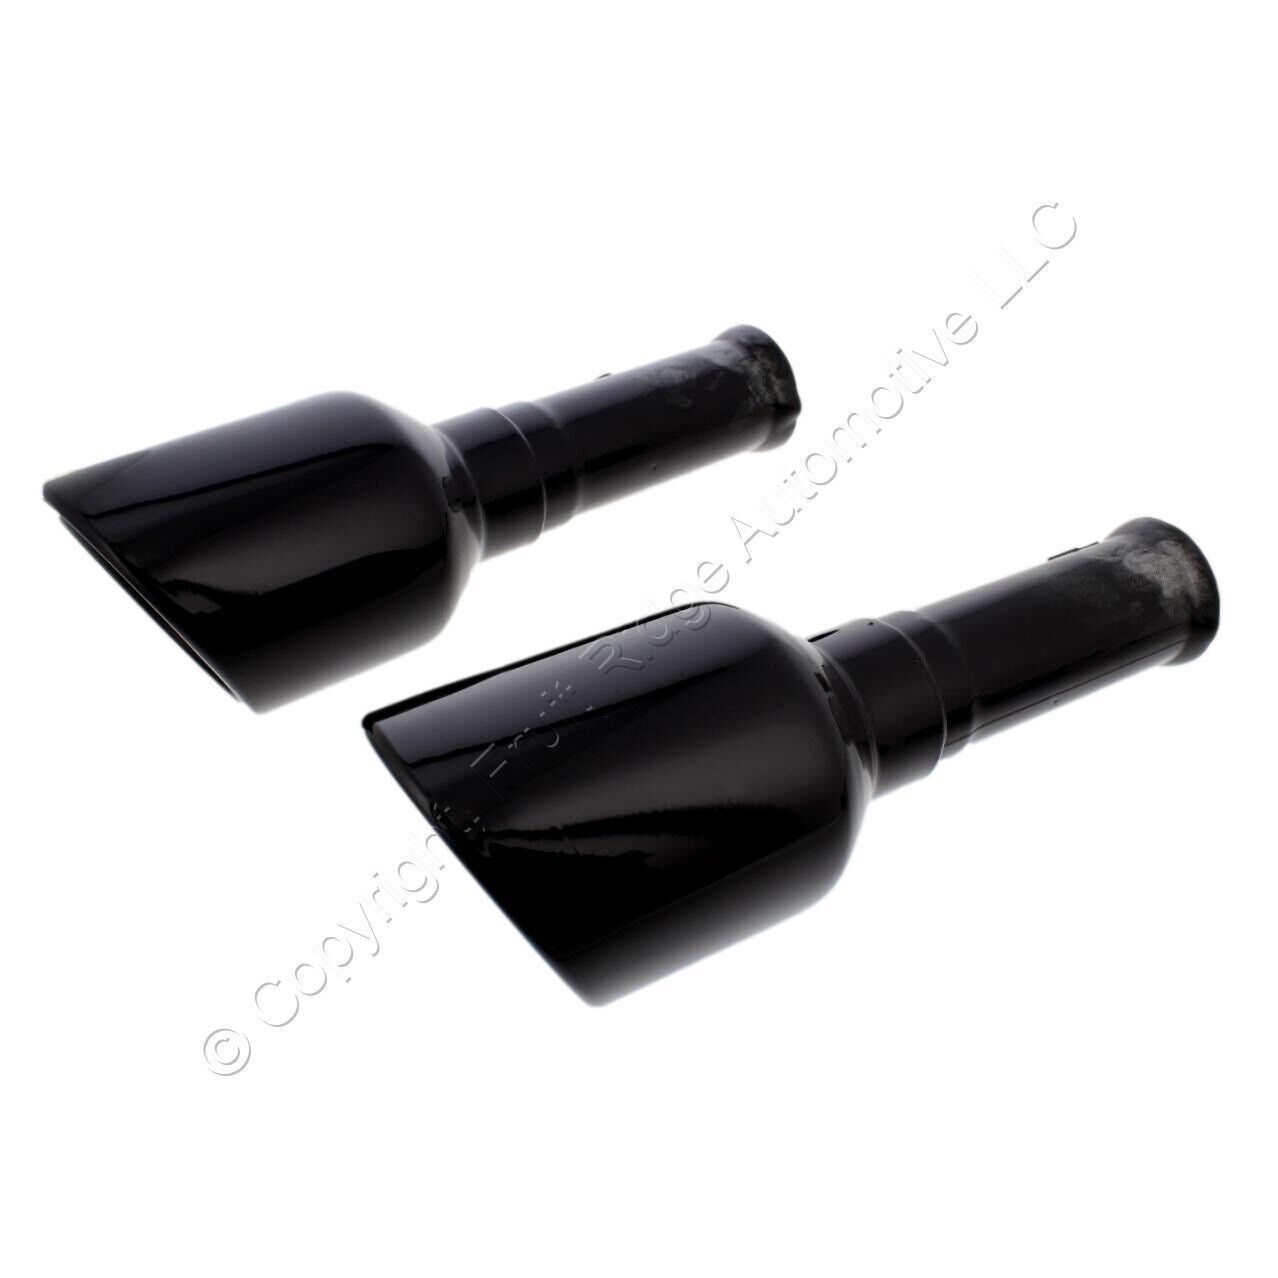 Pair High Gloss Black OEM Mopar 5.7L Exhaust Tailpipe Tips for 2019-21 Ram 1500